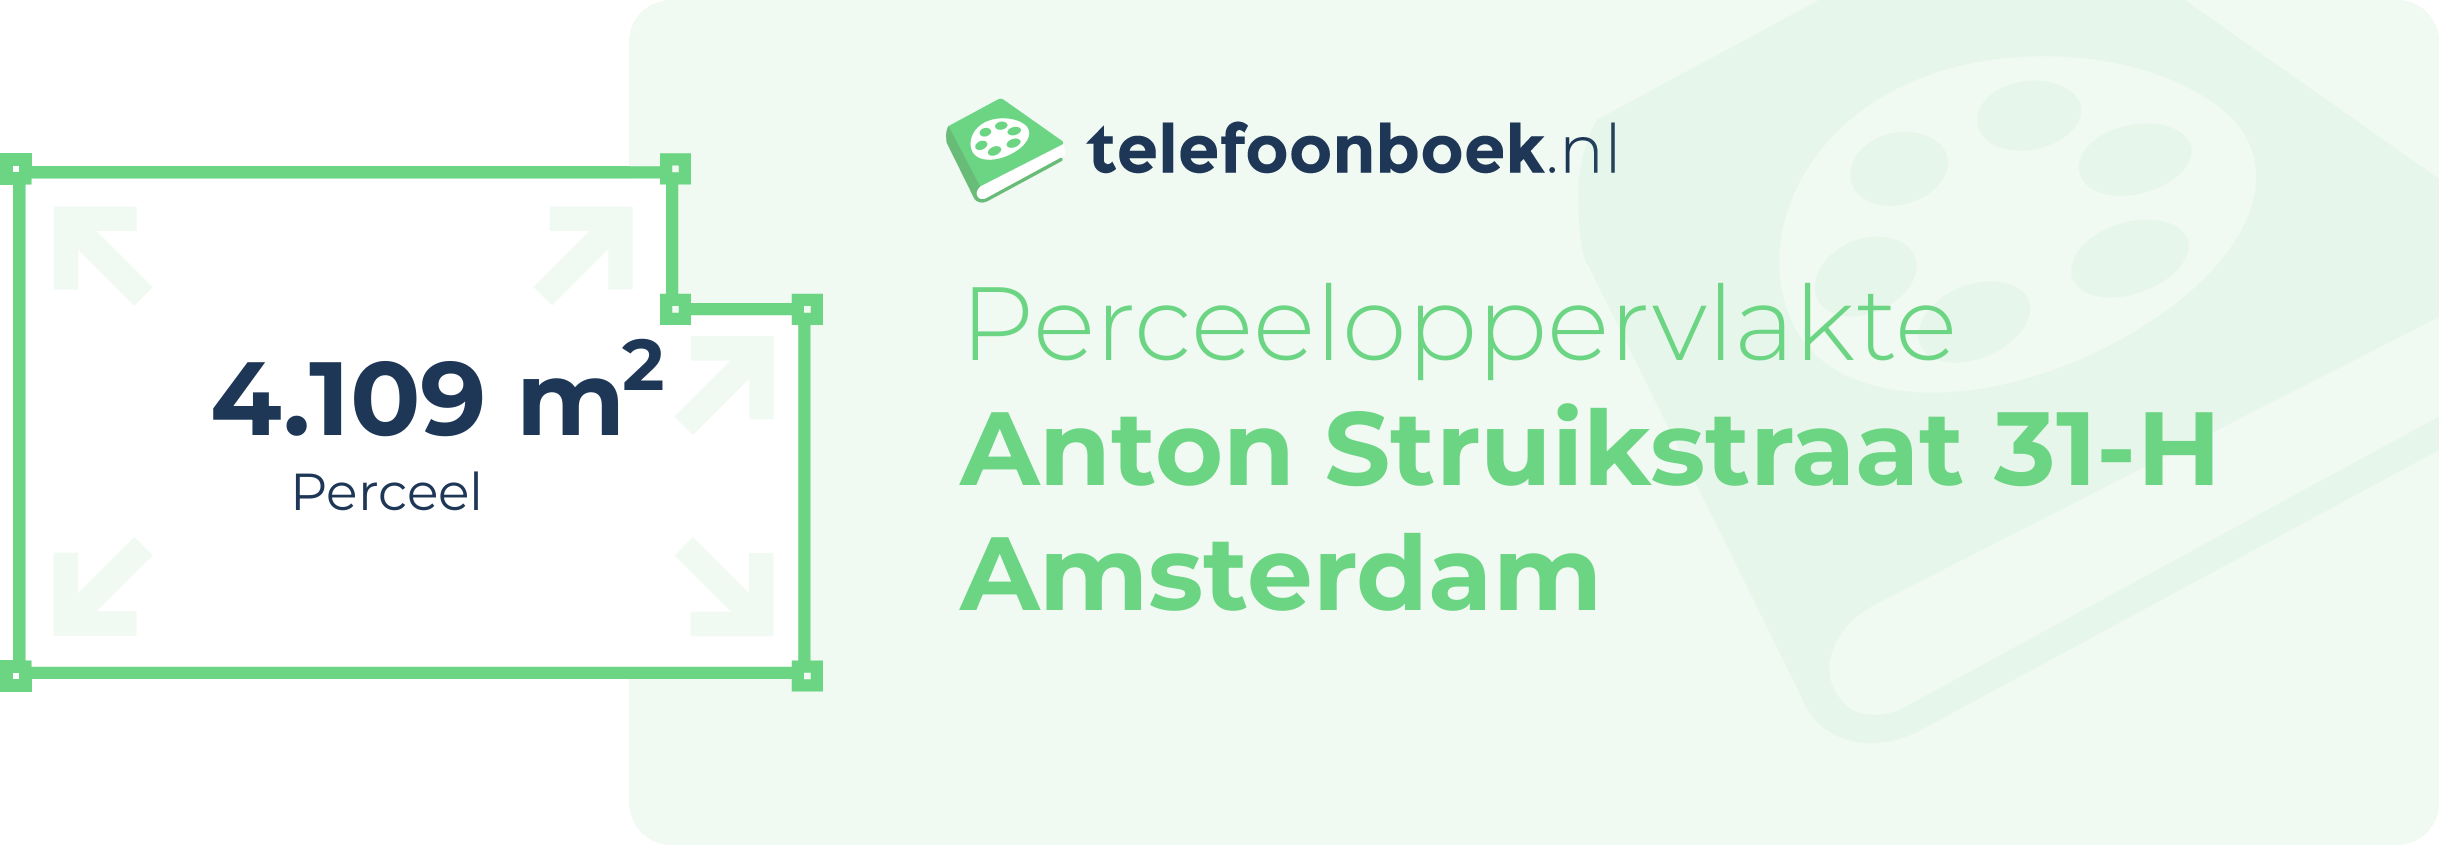 Perceeloppervlakte Anton Struikstraat 31-H Amsterdam